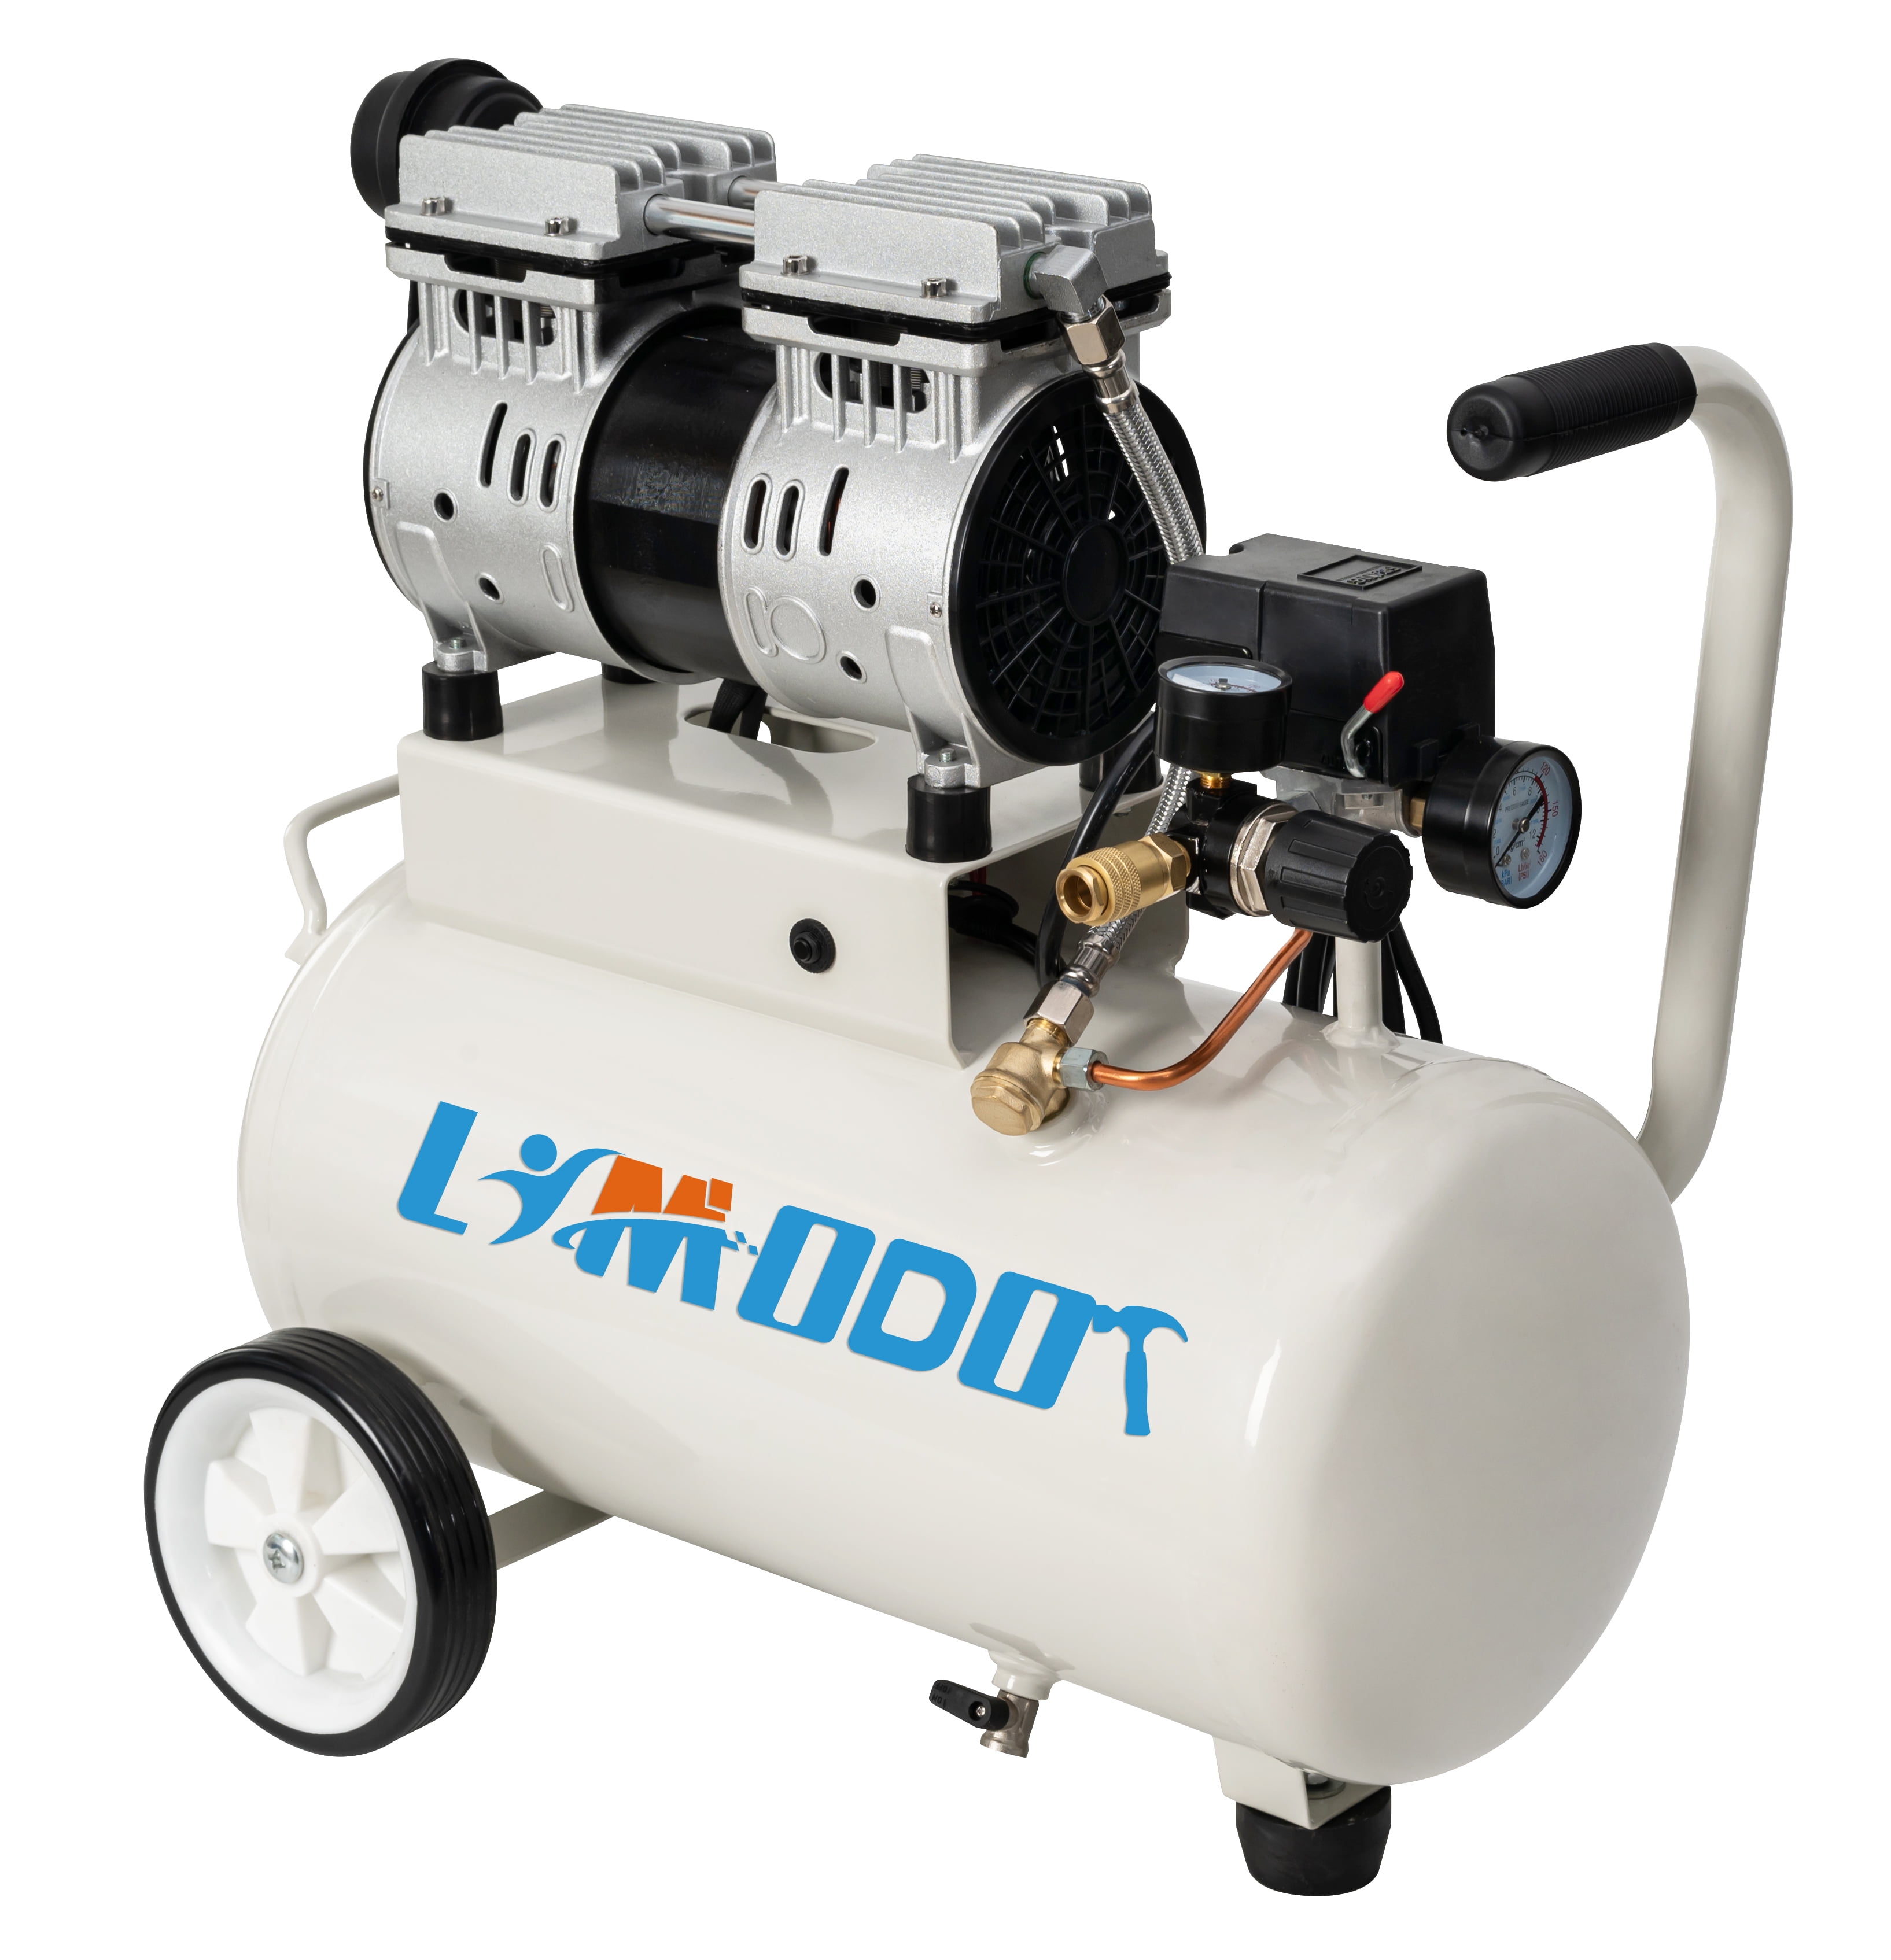 Limodot 115V 1.5 HP Portable Air Compressor, Ultra Quiet 68dB, Oil